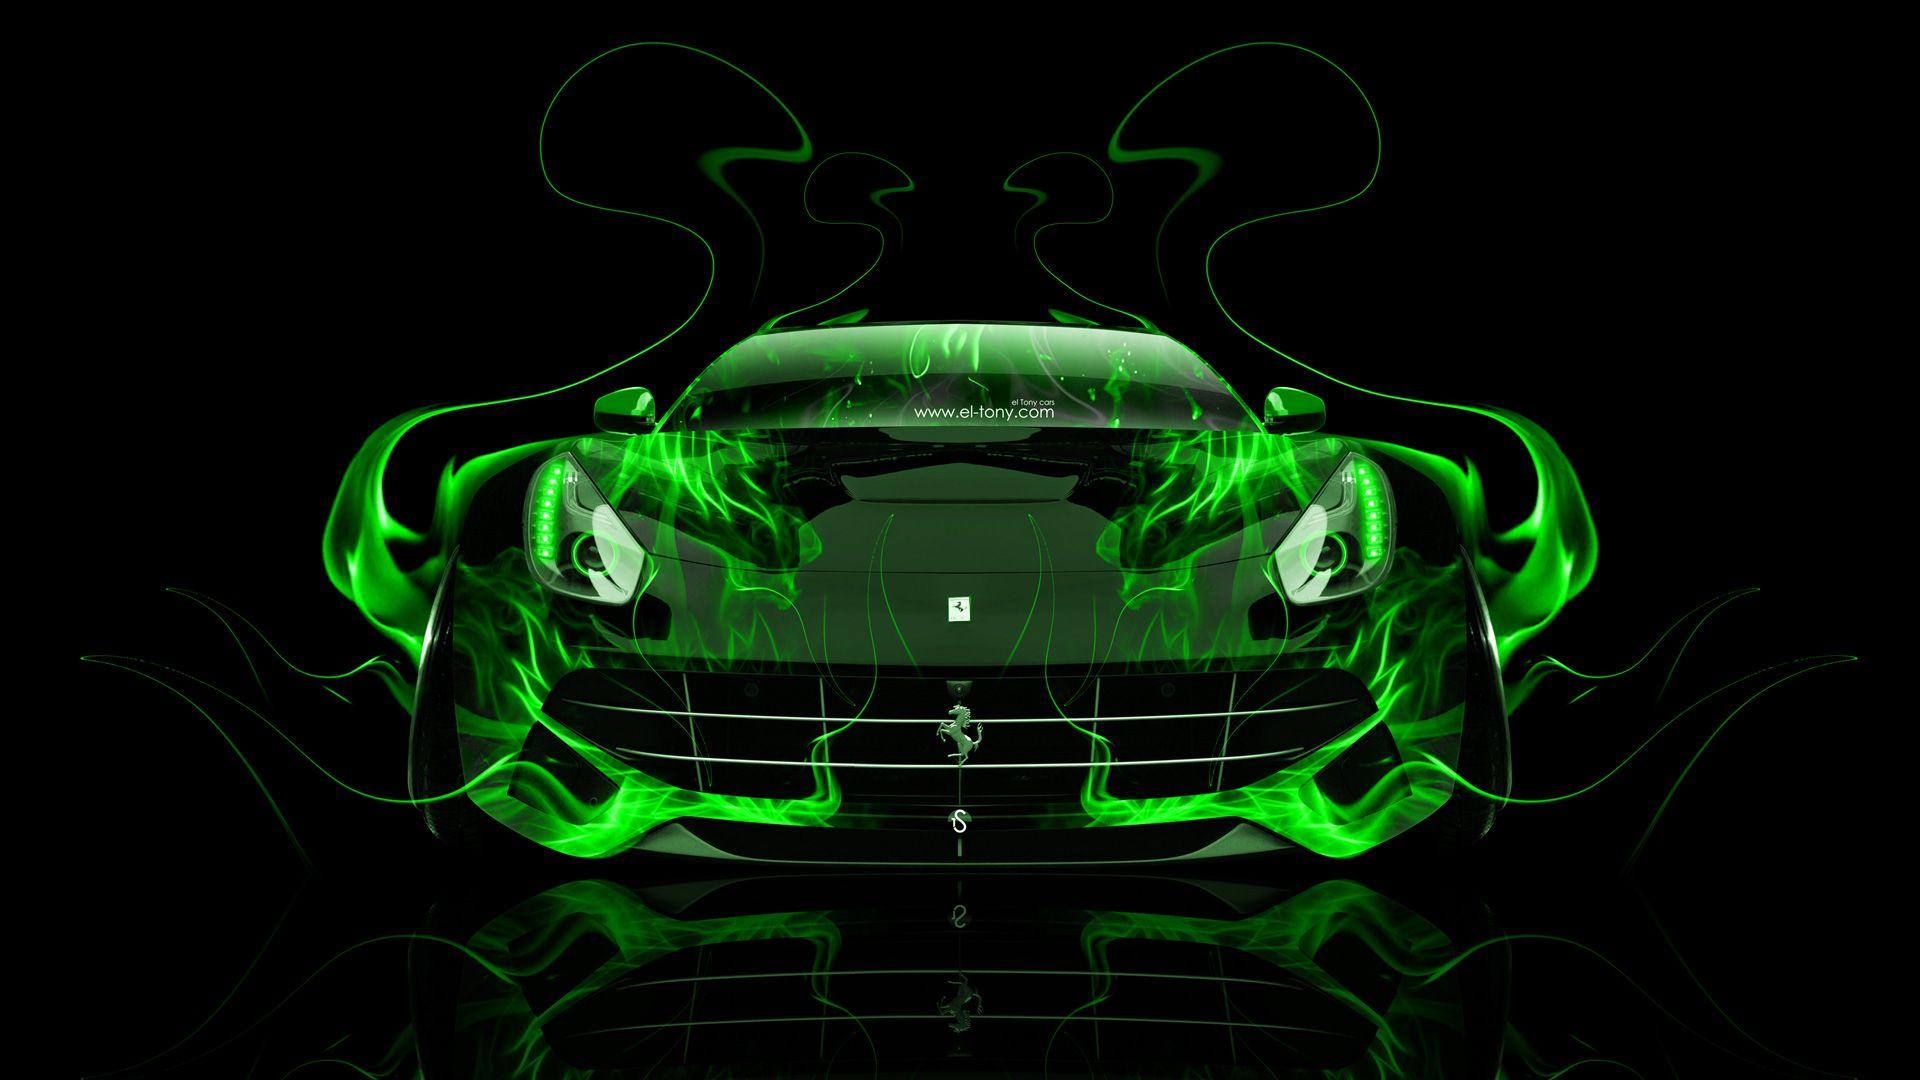 Green Ferrari Wallpapers - Top Free Green Ferrari Backgrounds ...